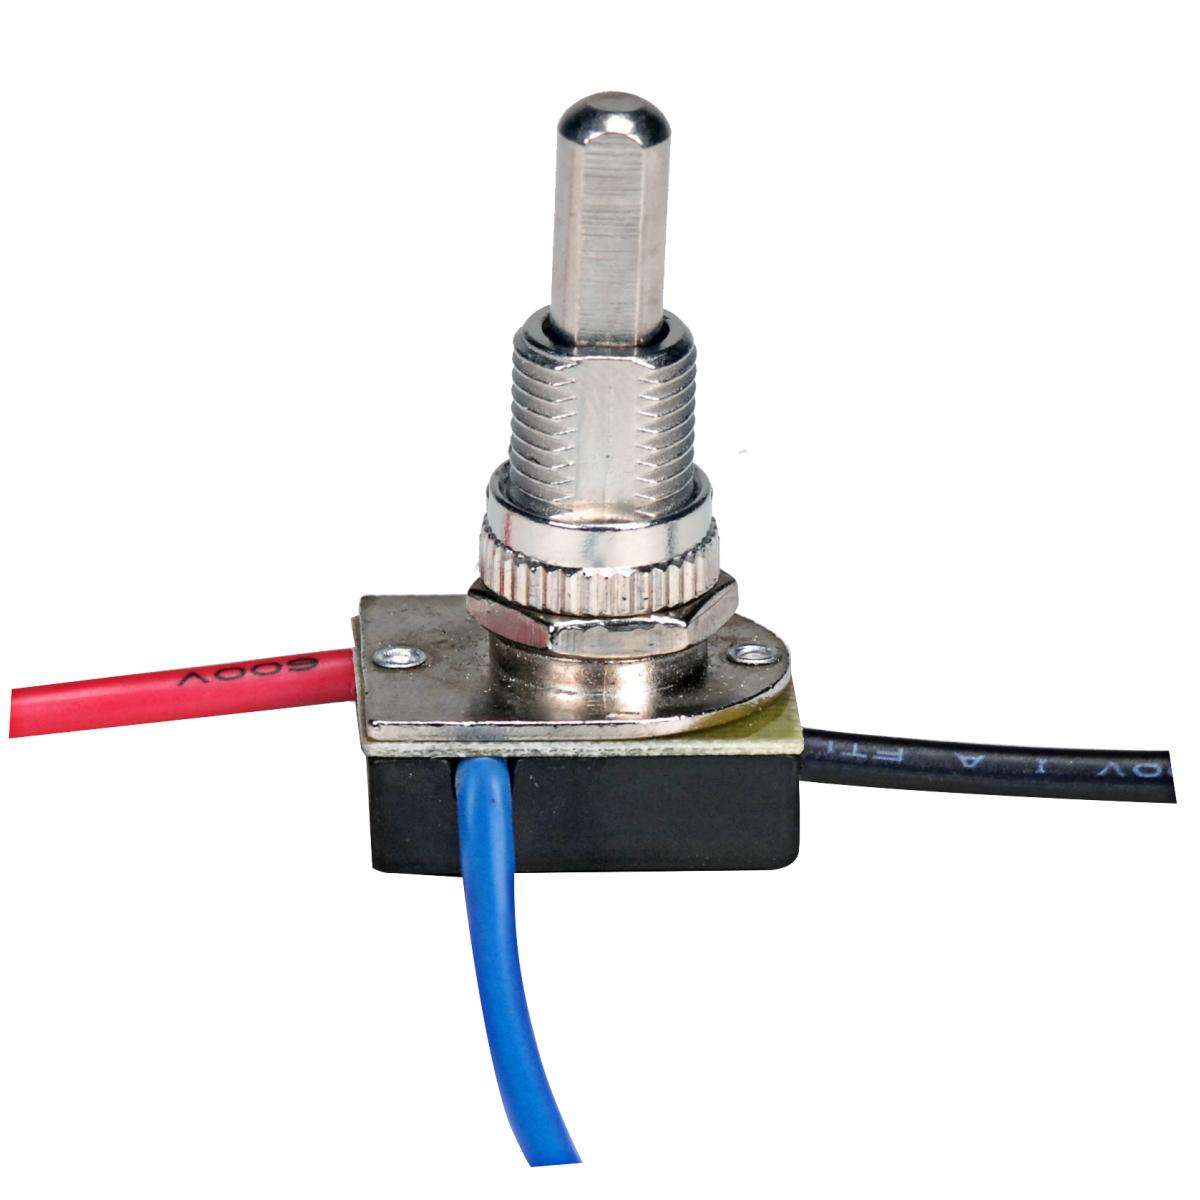 Satco 80-1131 3-Way Metal Push Switch 5/8" Metal Bushing 2 Circuit 4 Position (L-1, L-2, L1-2, Off) 6A-125V, 3A-250V Rating Nickel Finish